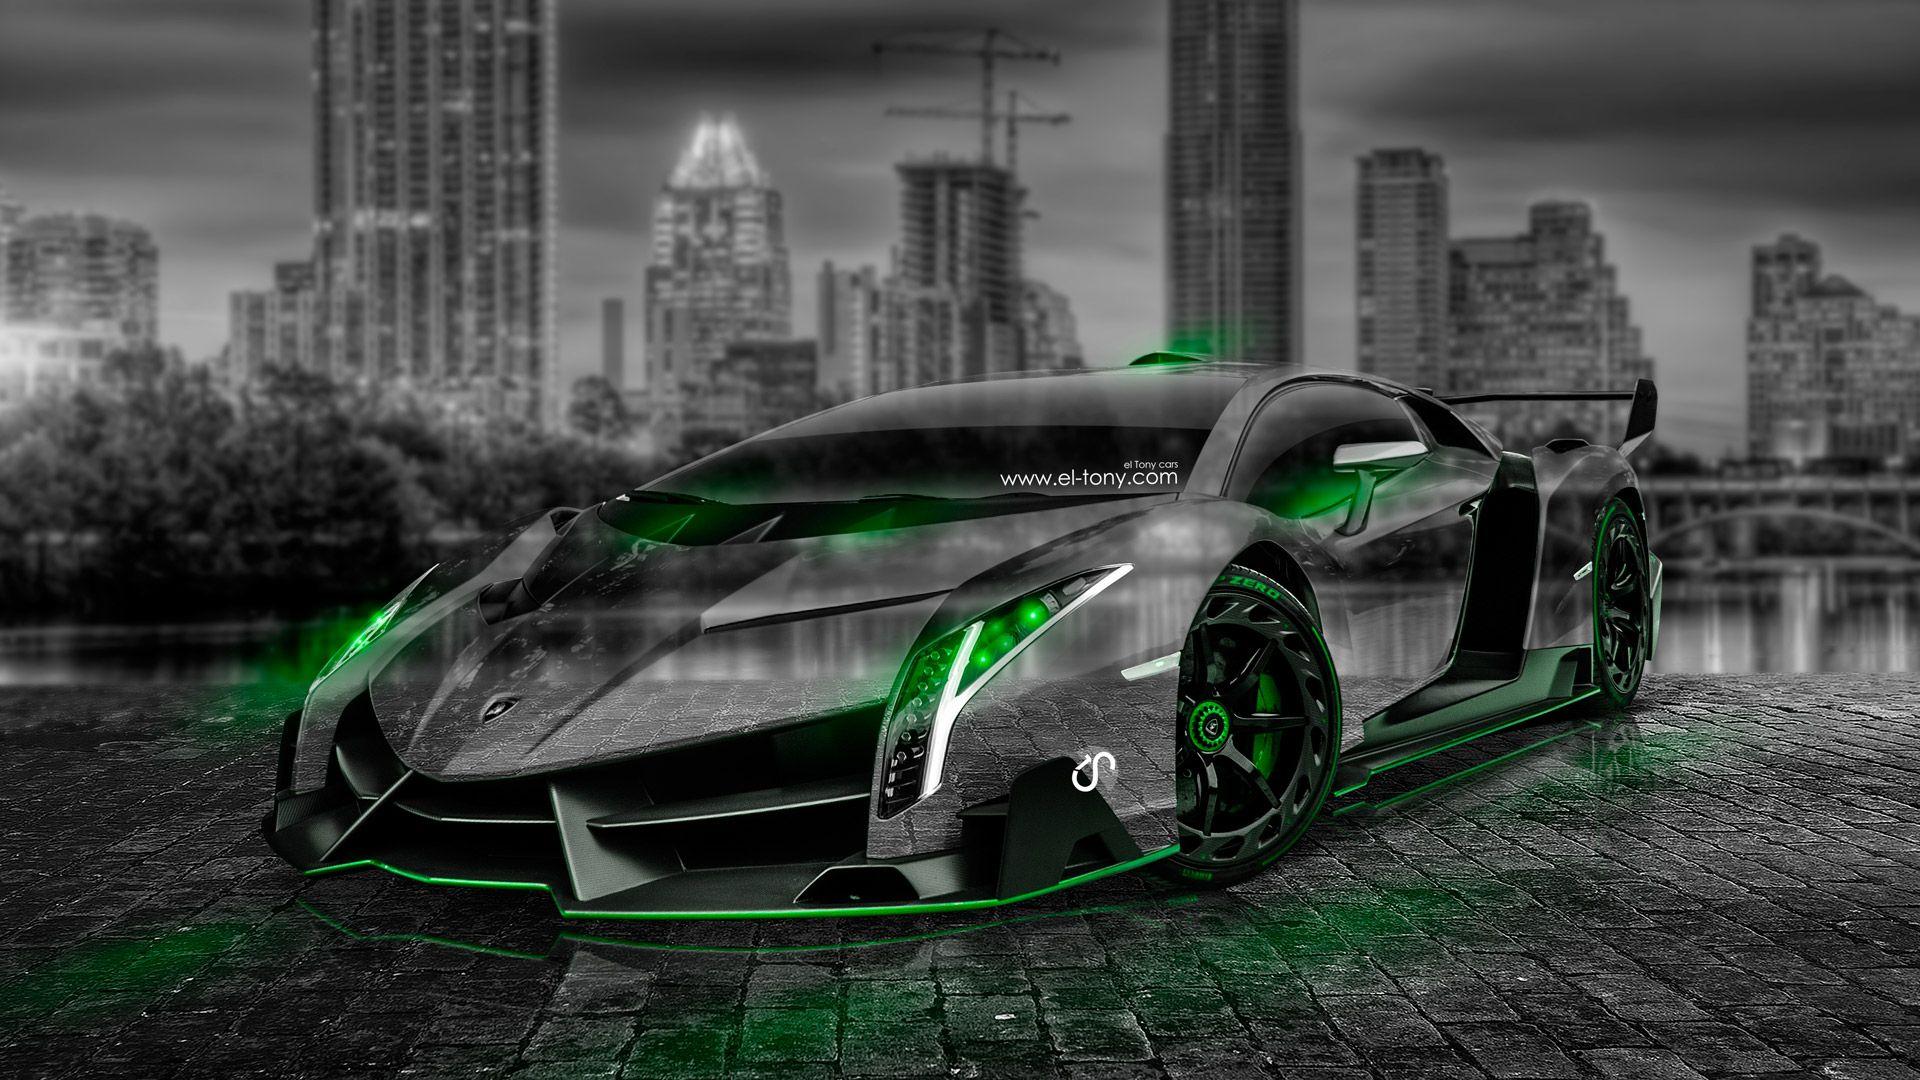 Neon Lamborghini Wallpapers - Top Free Neon Lamborghini ...